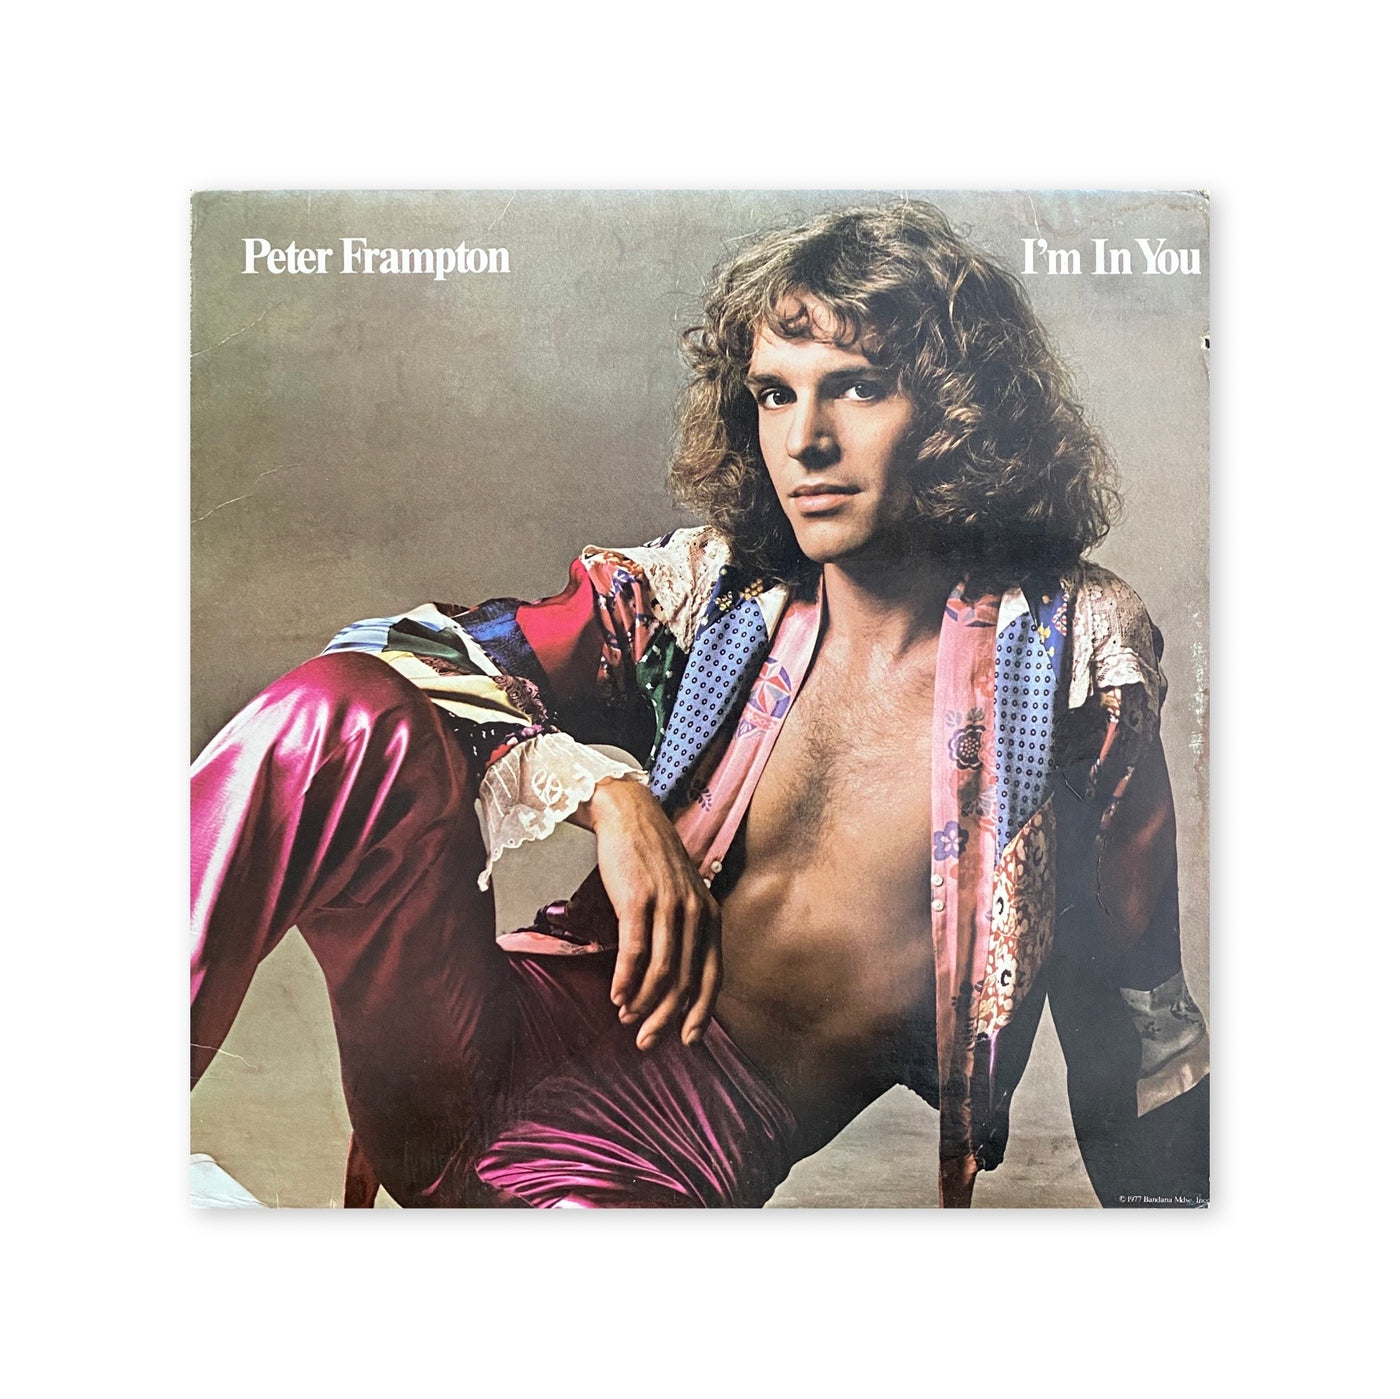 Peter Frampton - I'm In You